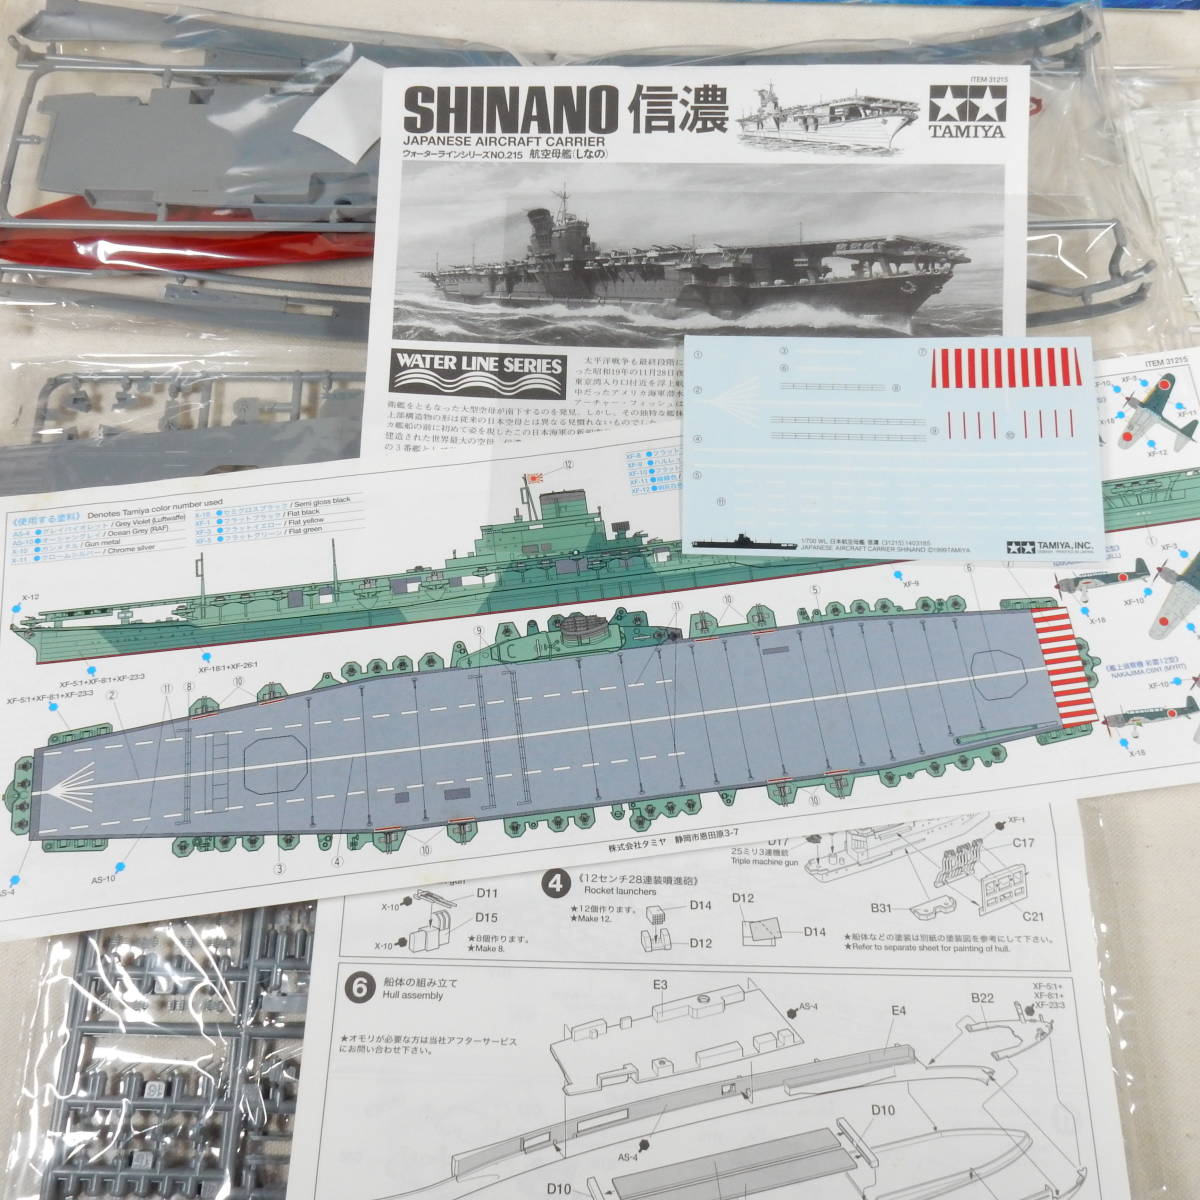 (17C121) 日本航空母艦 信濃(しなの) タミヤ 1/700 ウォーターラインシリーズ NO.215 内袋未開封 未組立て_画像4